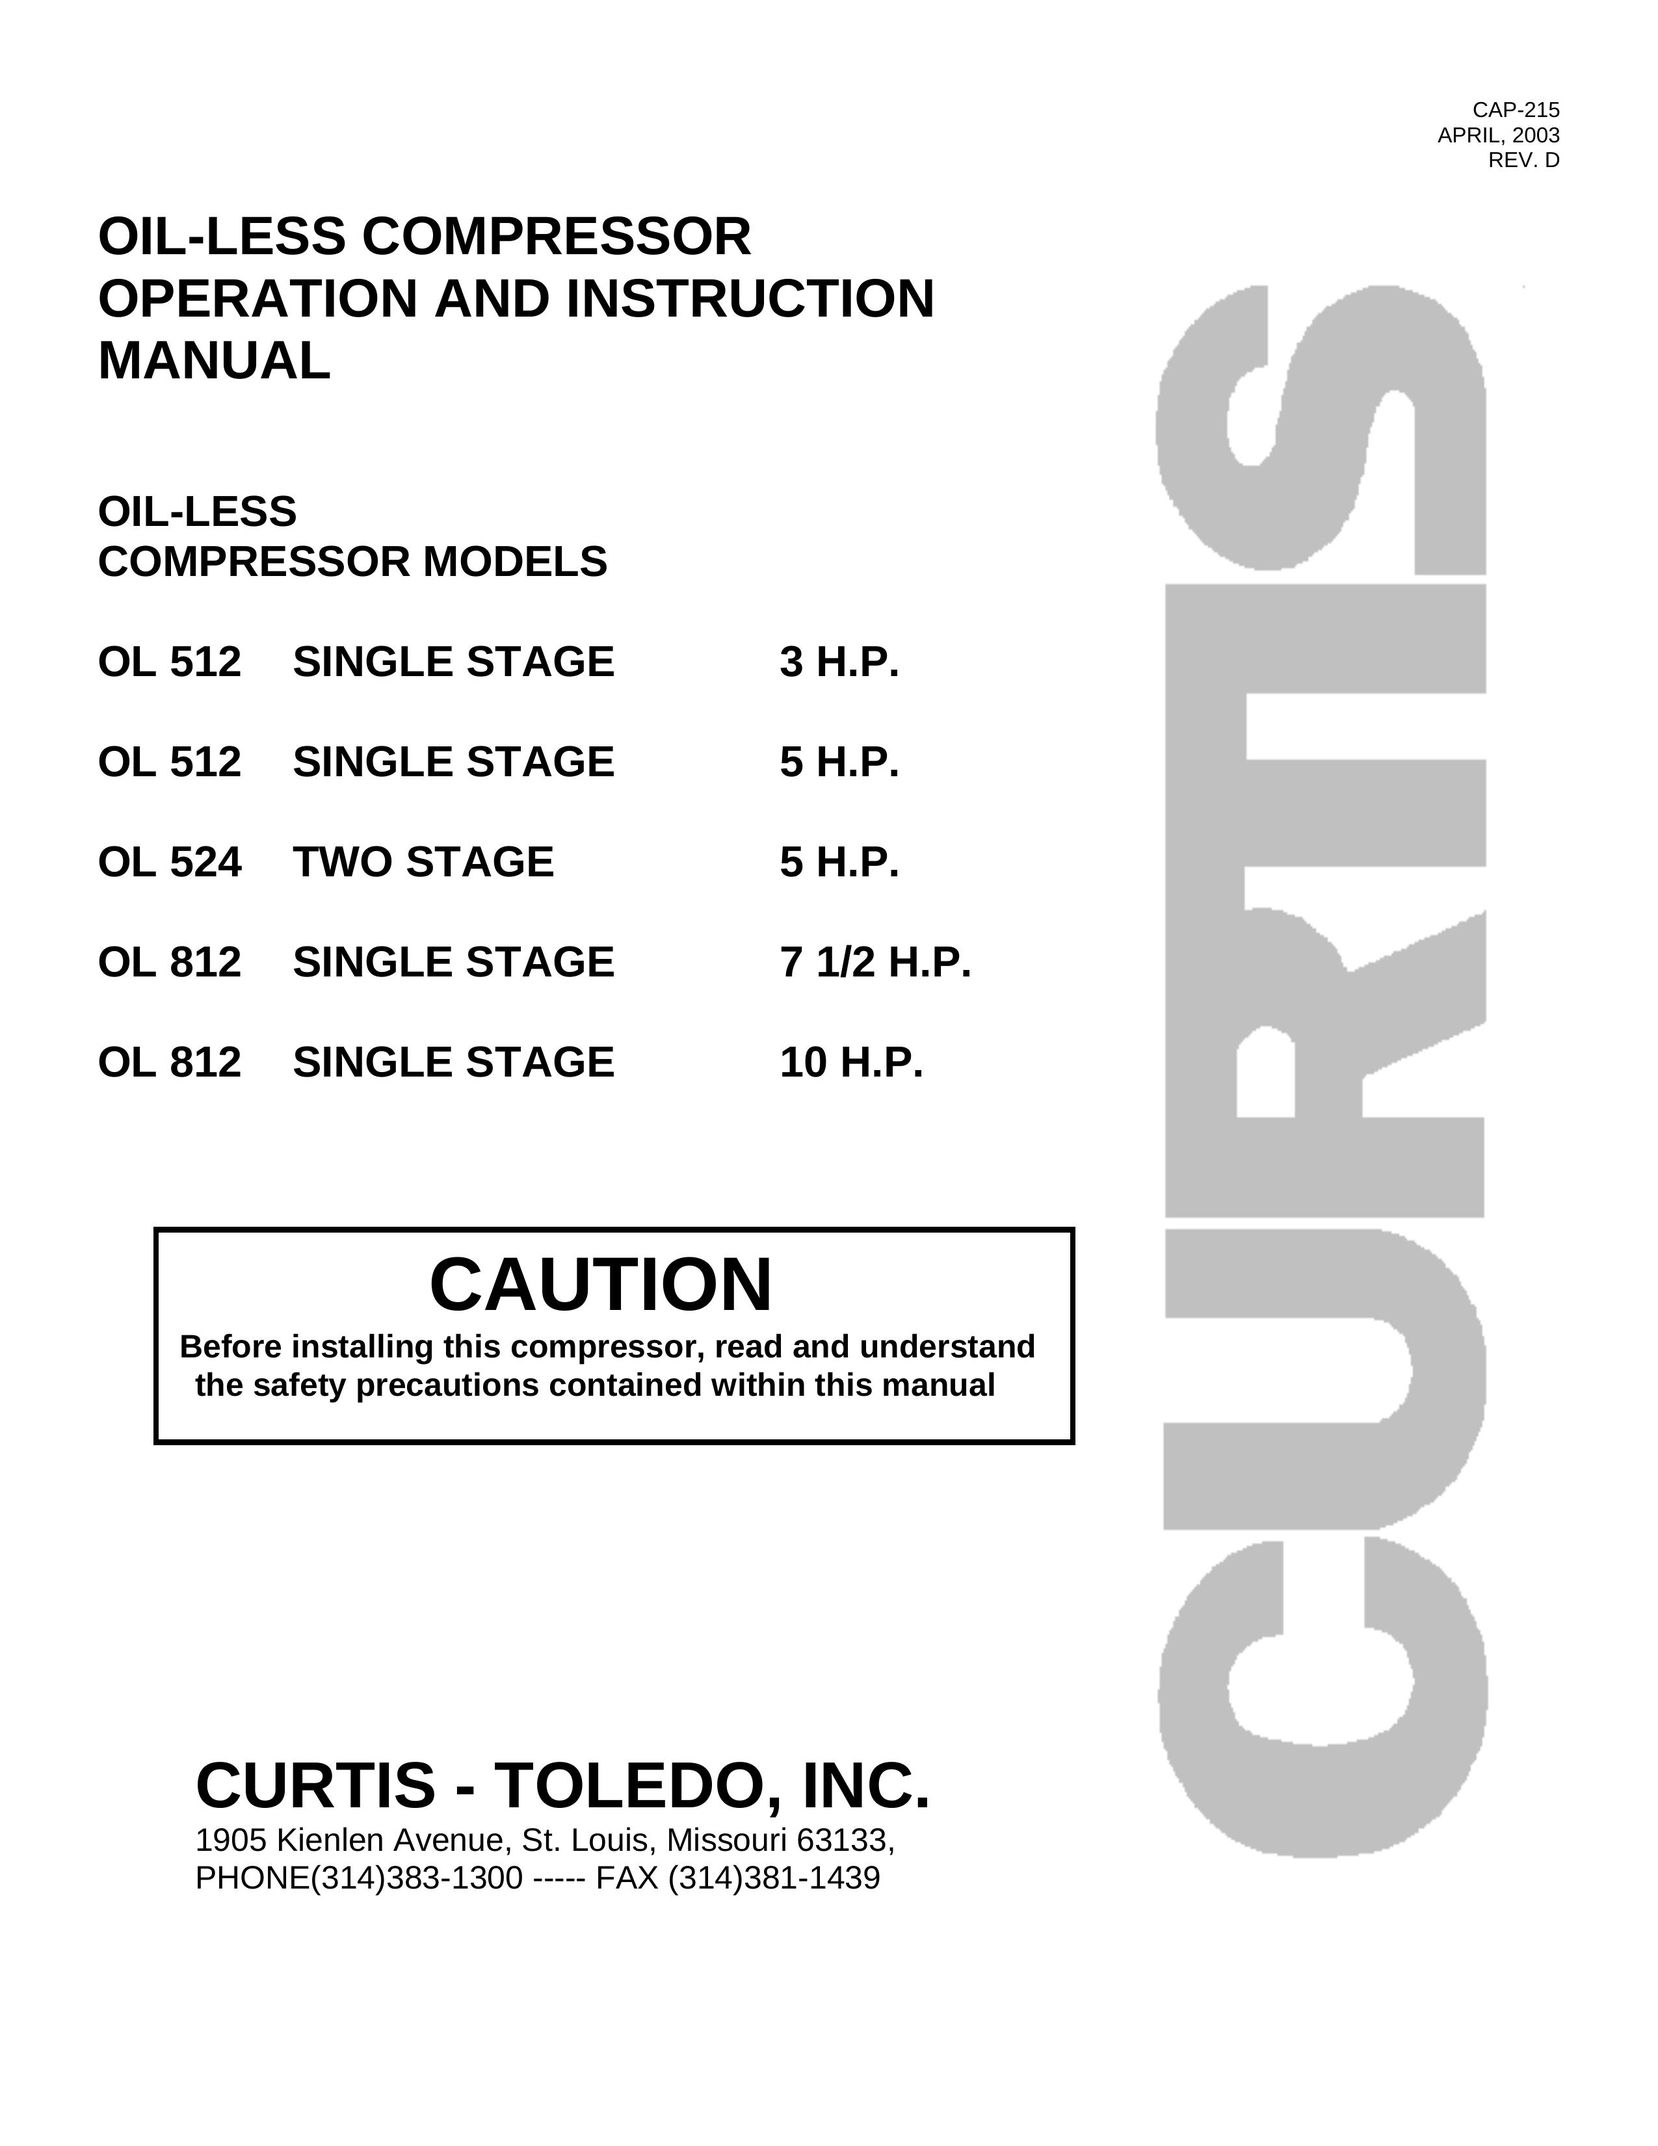 Curtis OL 512 Air Compressor User Manual